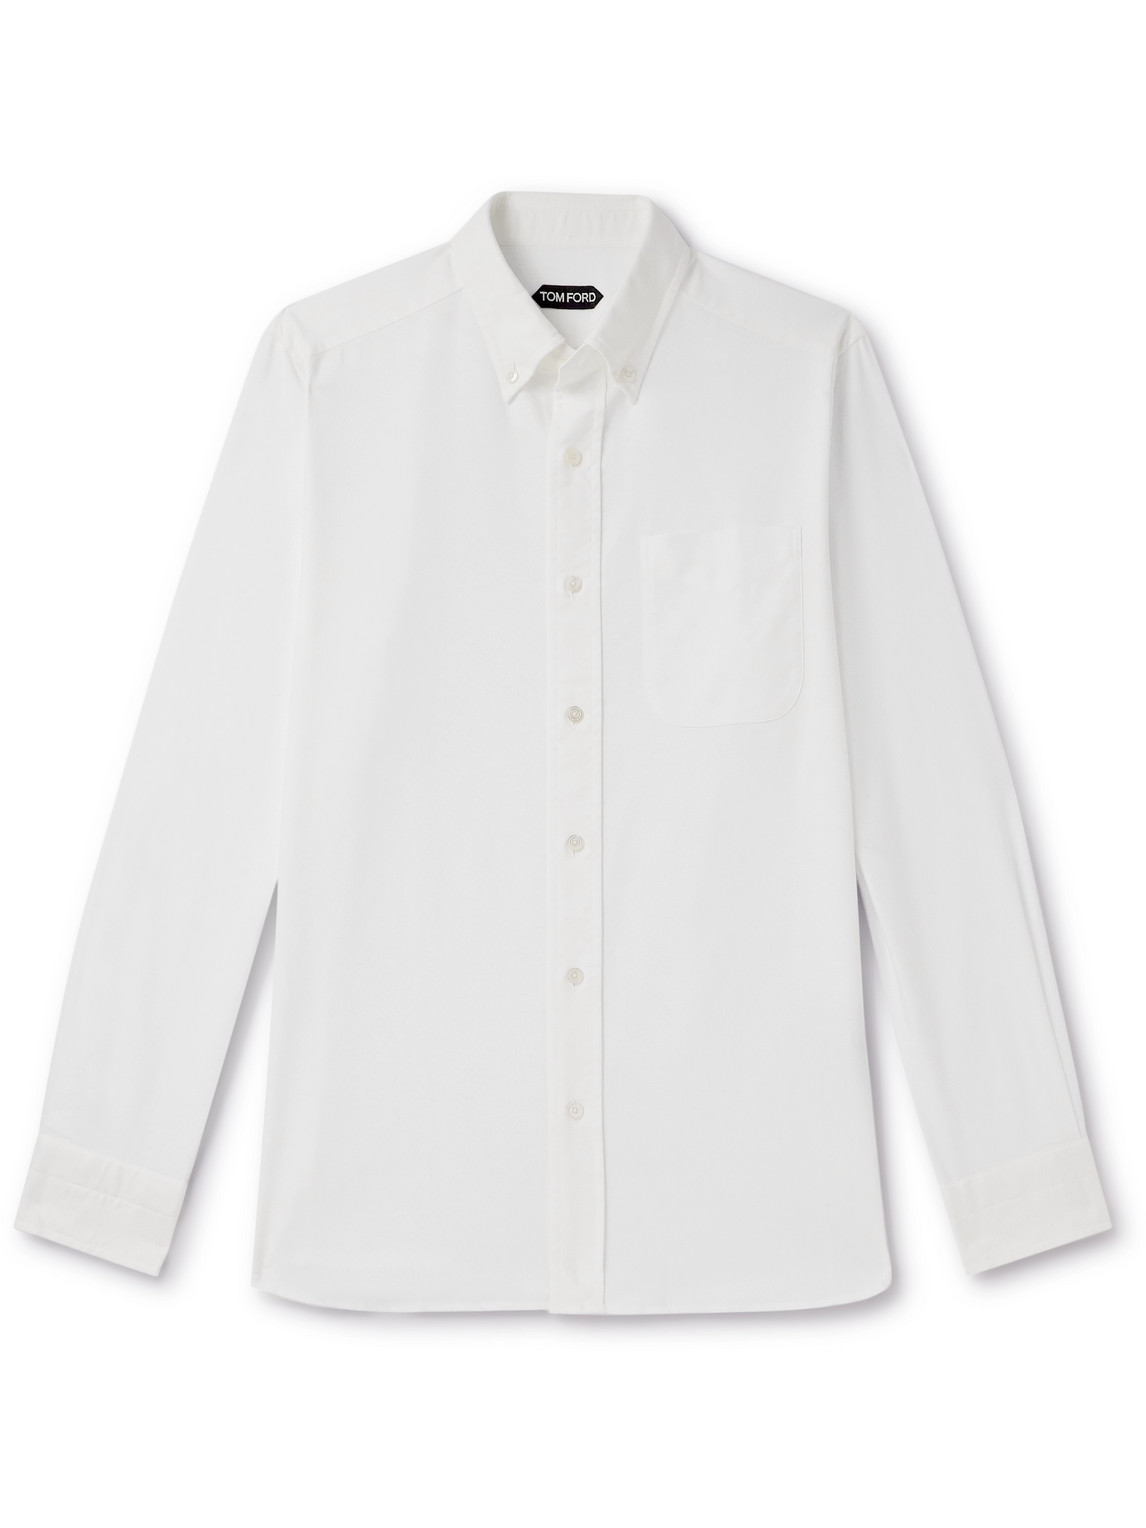 TOM FORD - Button-Down Collar Cotton Oxford Shirt - Men - White - EU 45 von TOM FORD